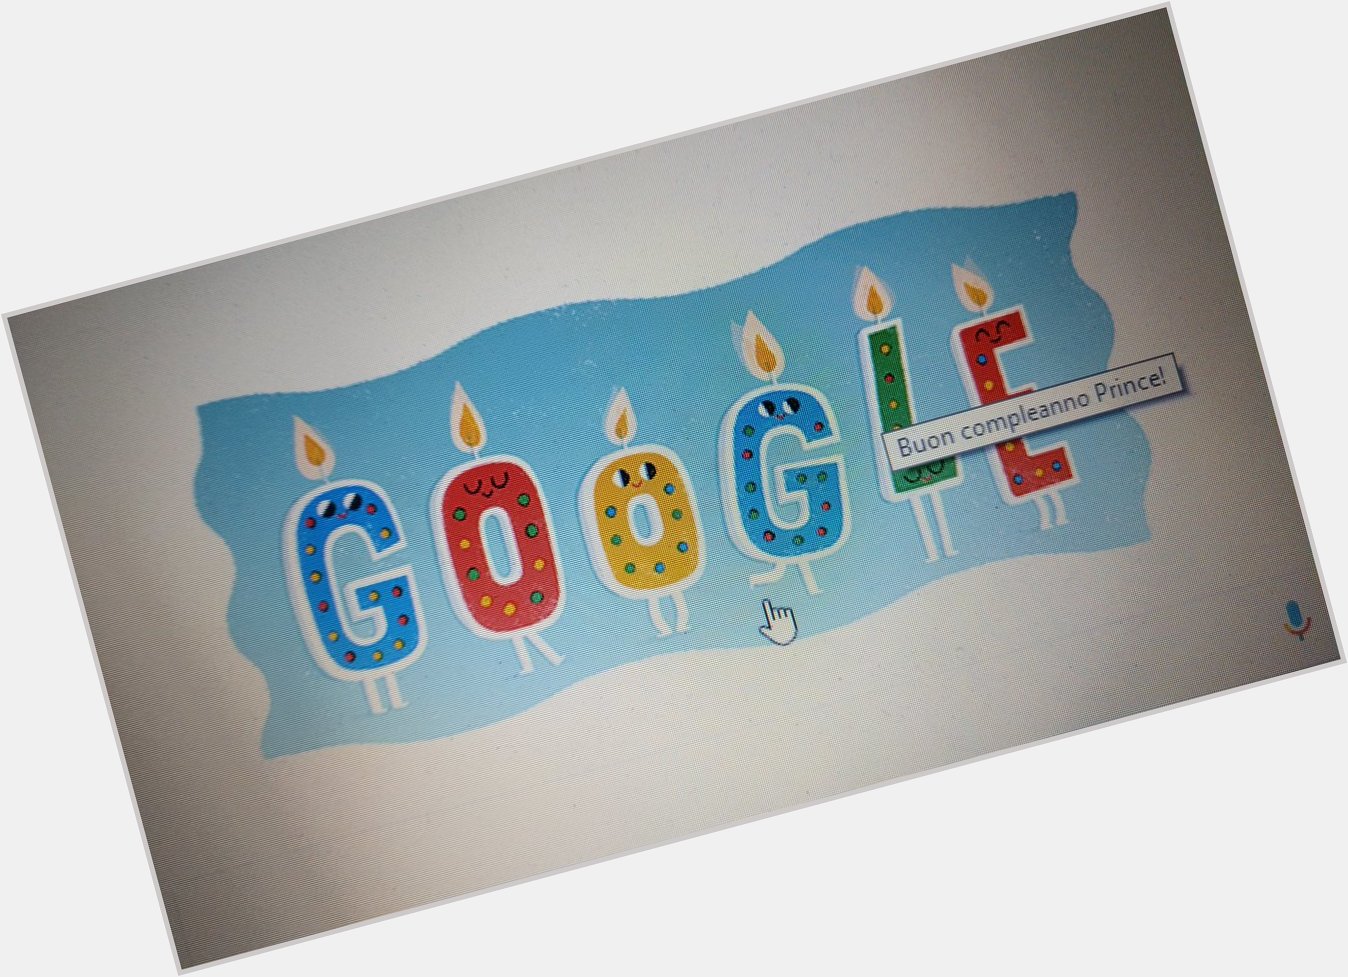 Oooh Google is saying \"happy birthday Prince!\" 